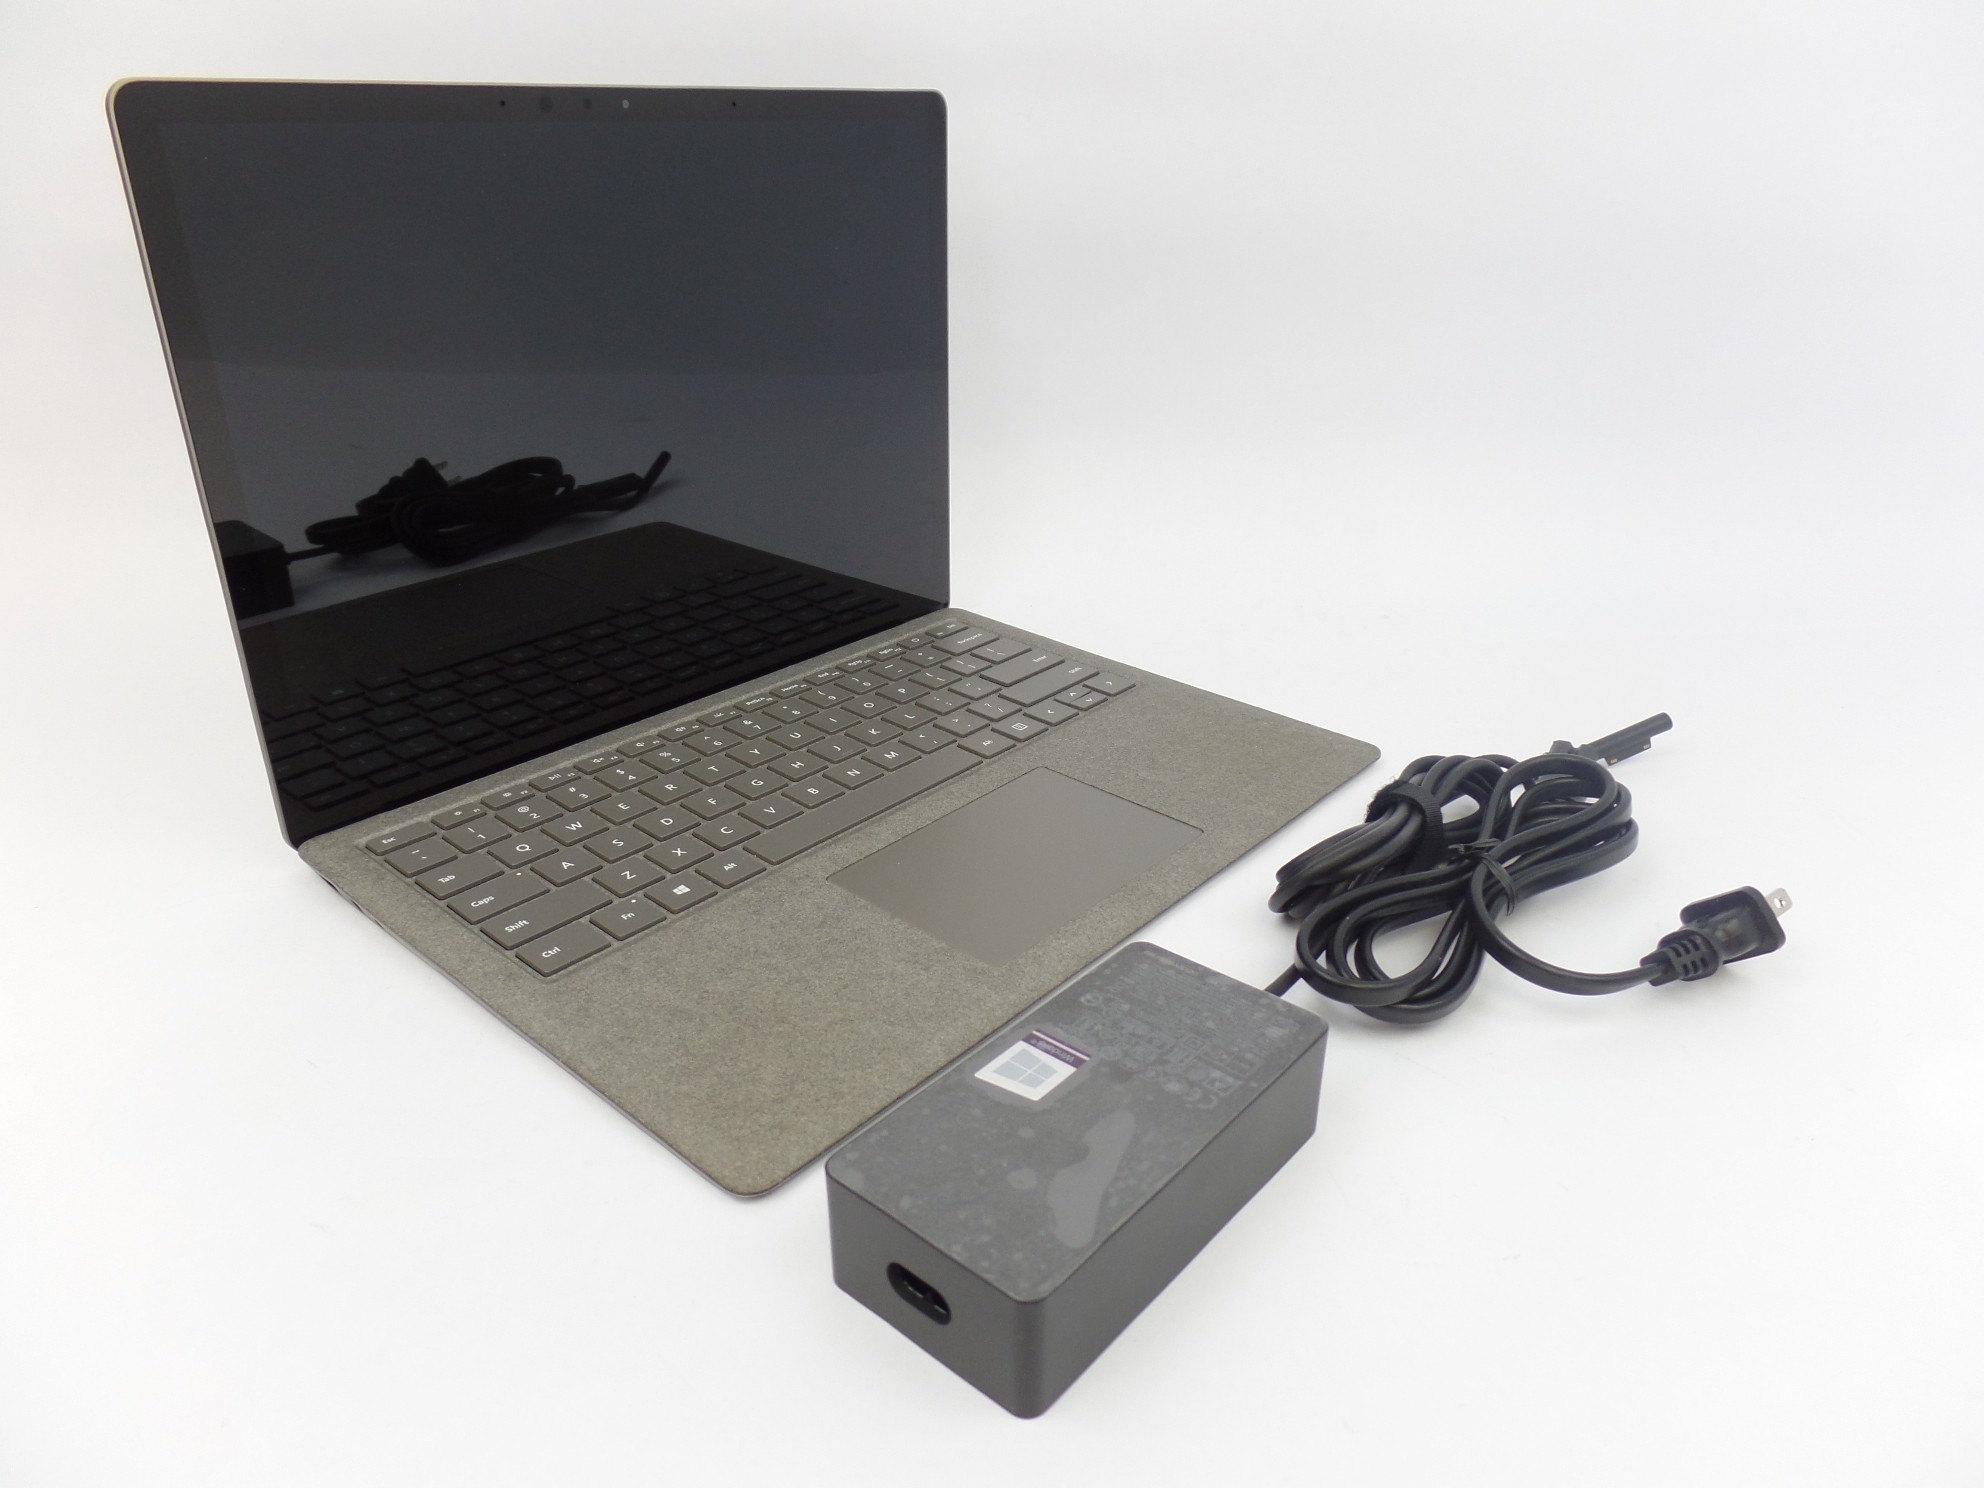 Microsoft Surface Laptop 1769 13.5" Touch i5-7200 2.5GHz 8GB 256GB SSD W10H Grey